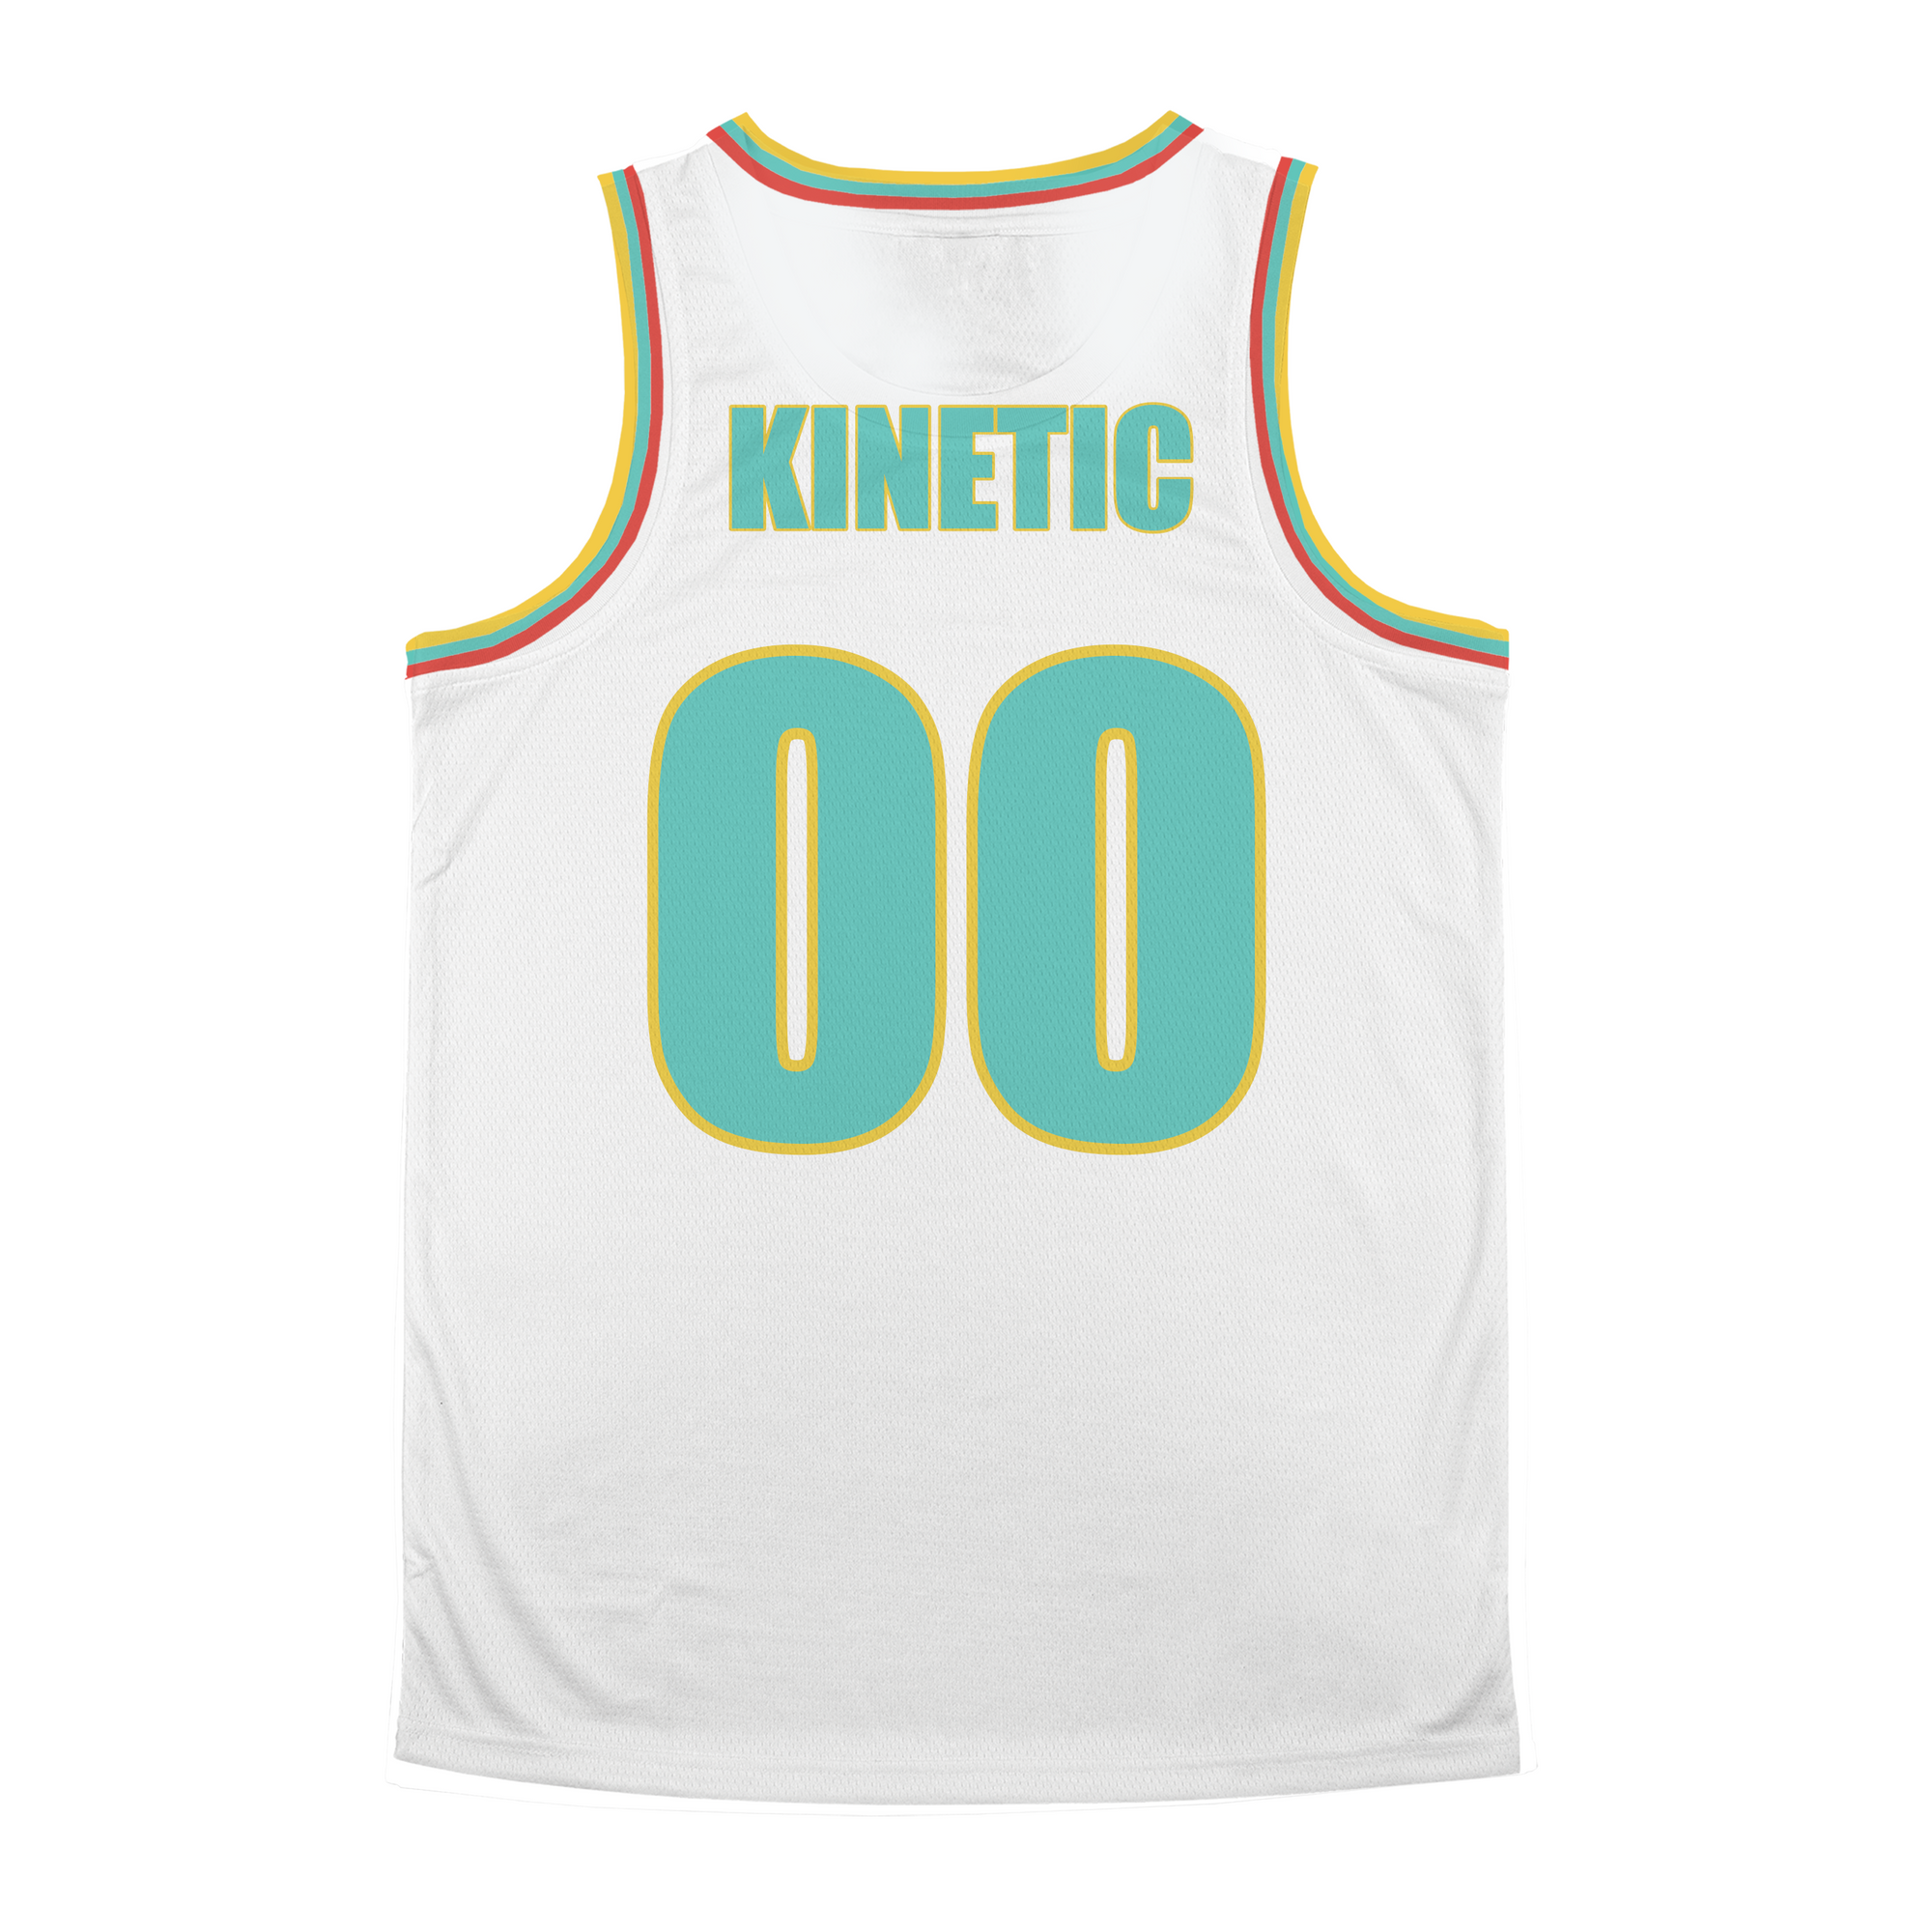 Pi Kappa Phi - Bolt Basketball Jersey